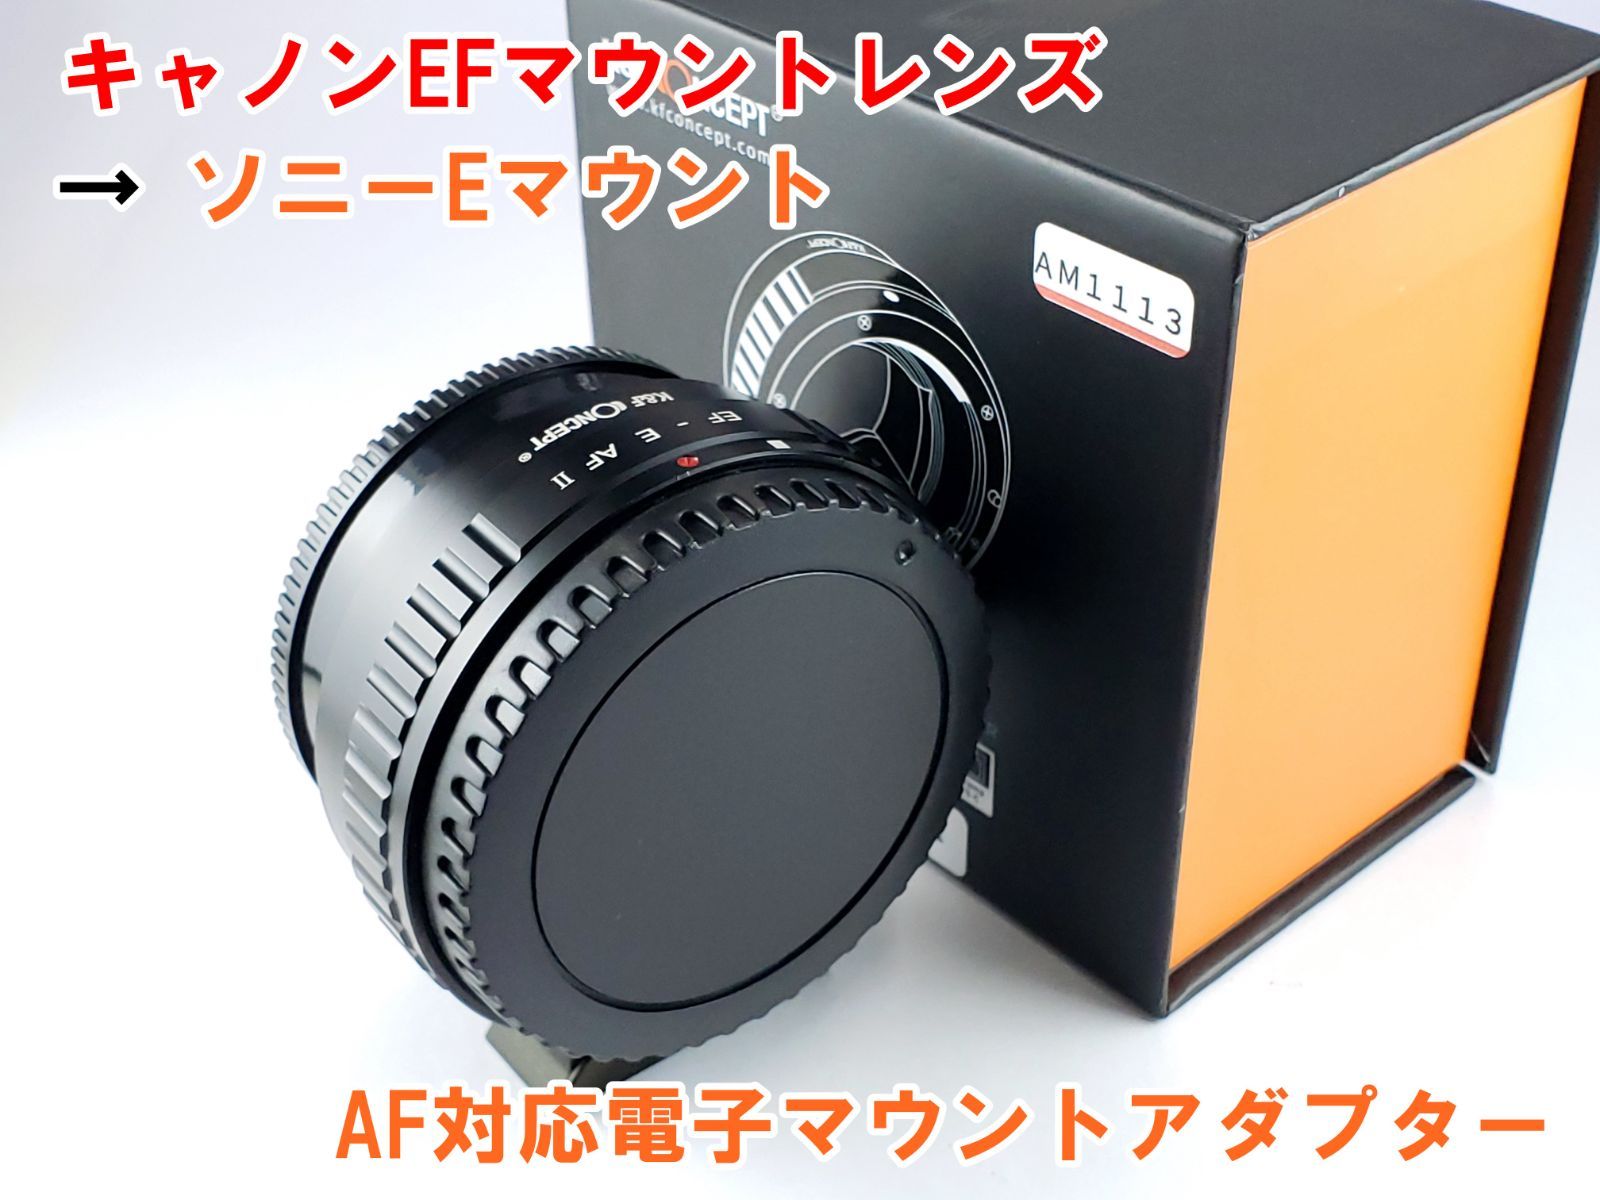 Canon EF マウント用アダプター - デジタルカメラ